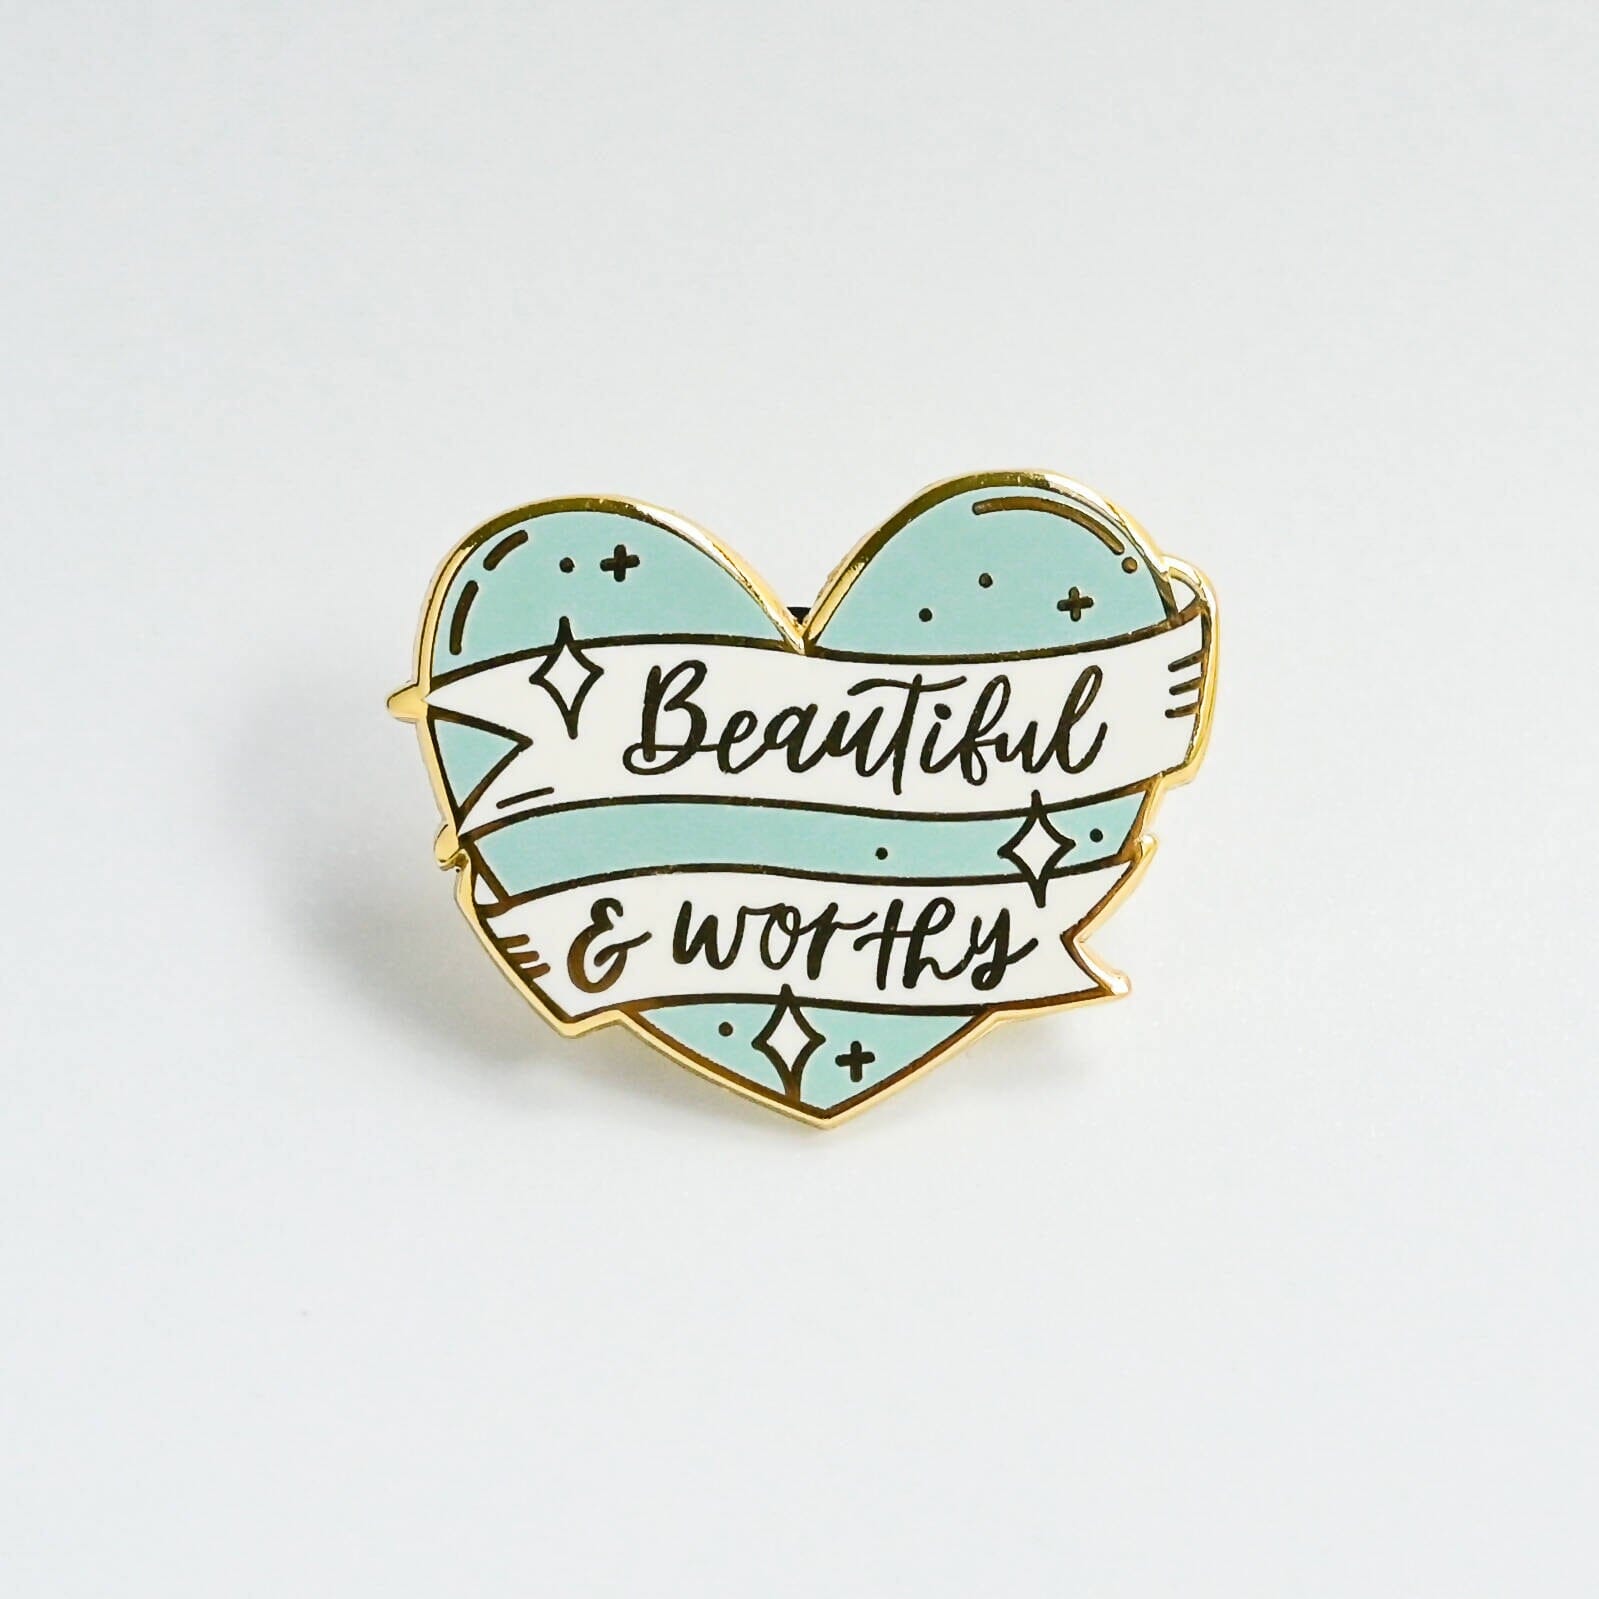 Pin on Beautiful things